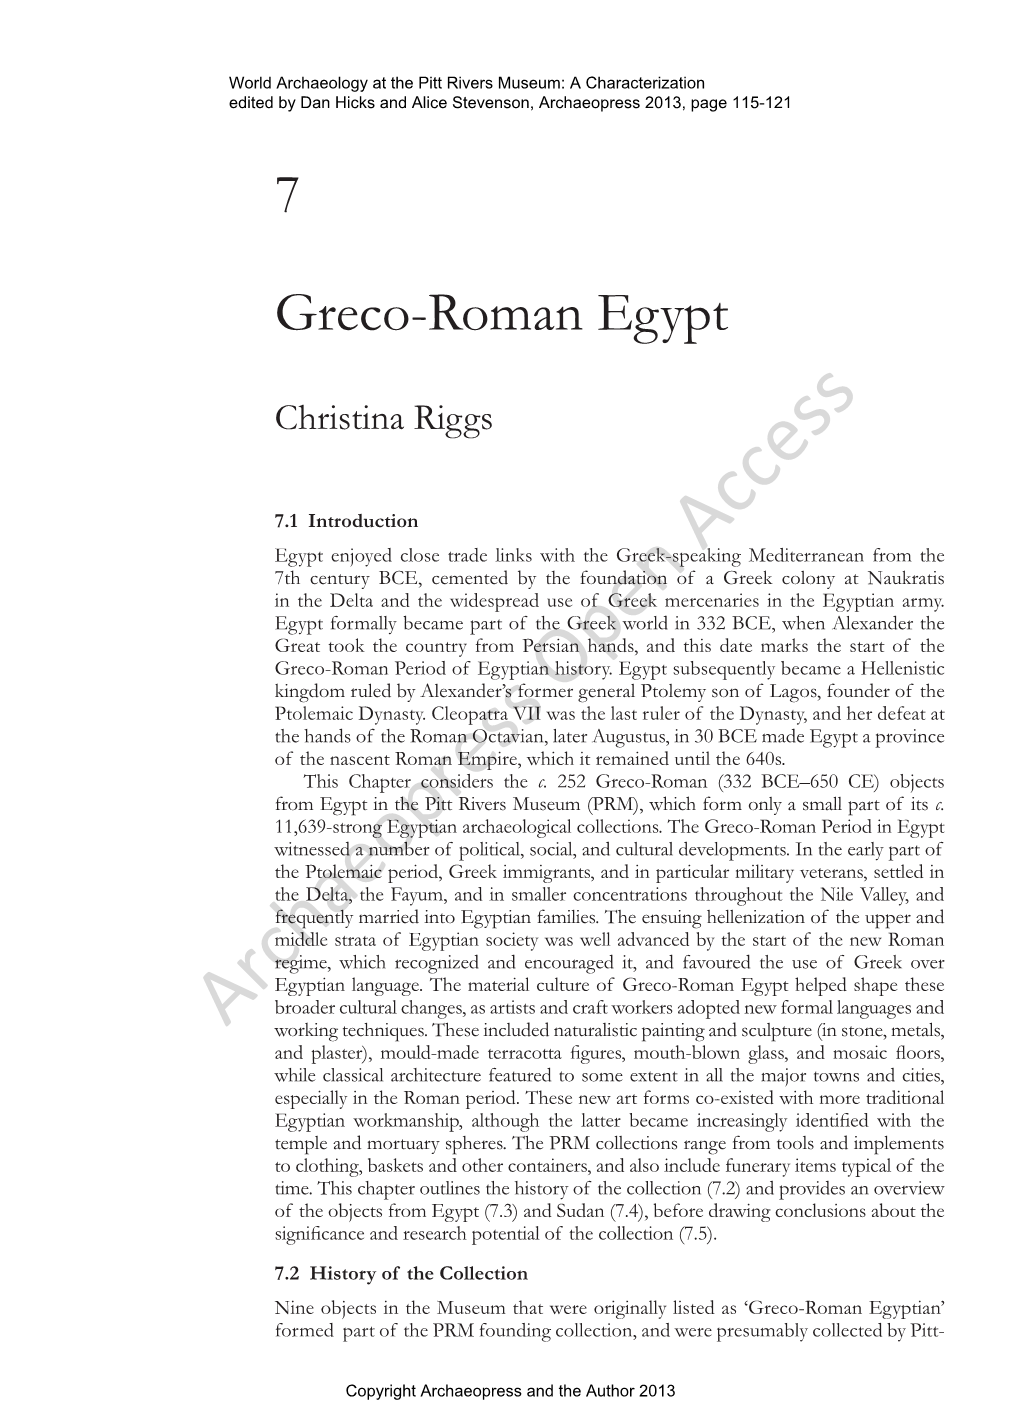 Greco-Roman Egypt